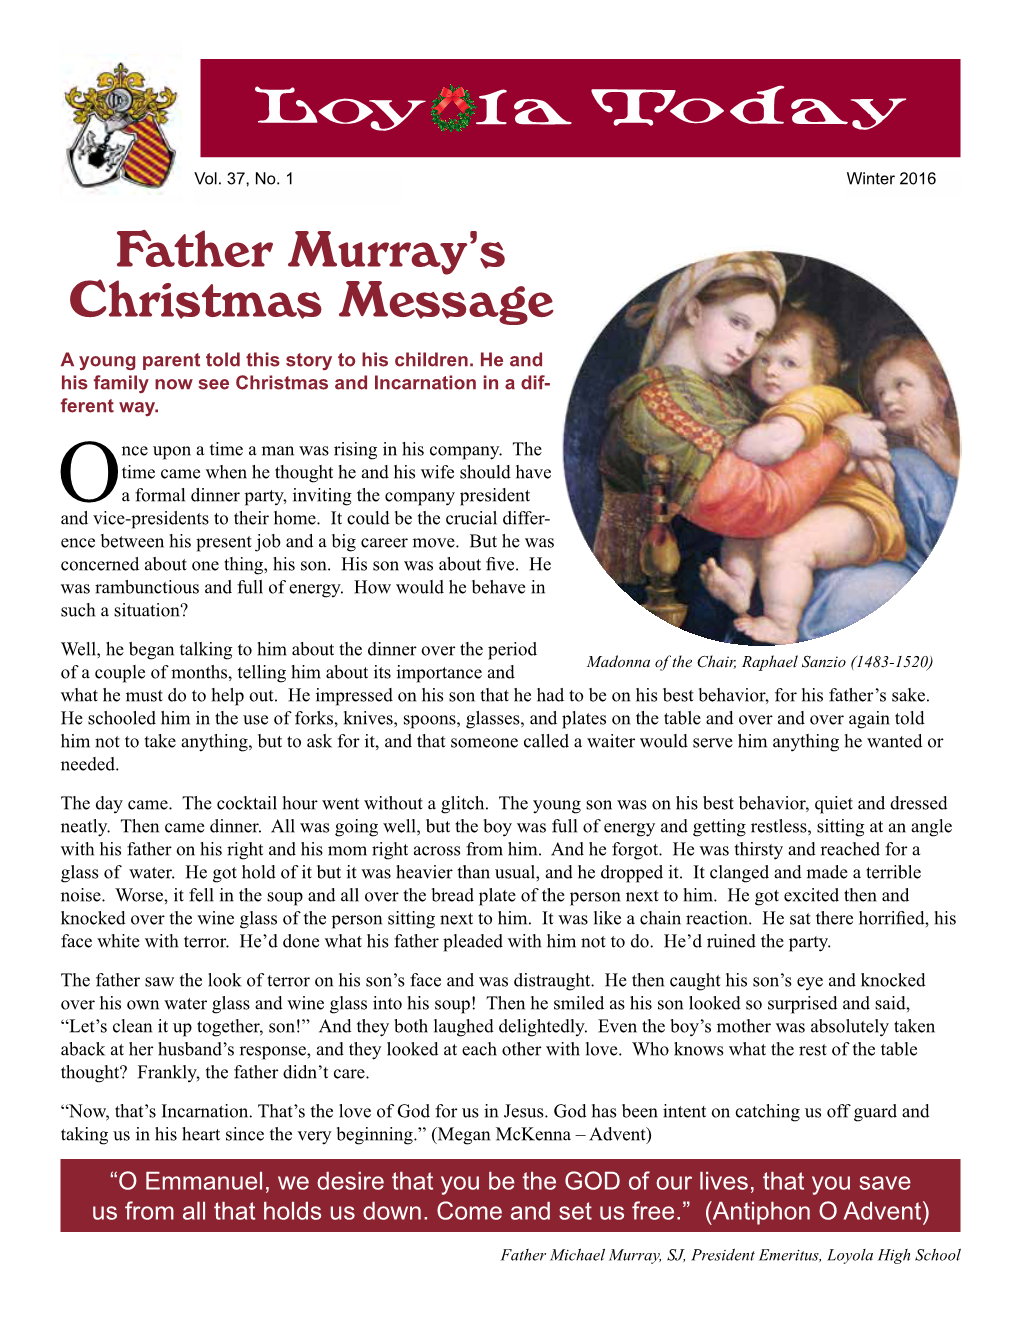 Father Murray's Christmas Message